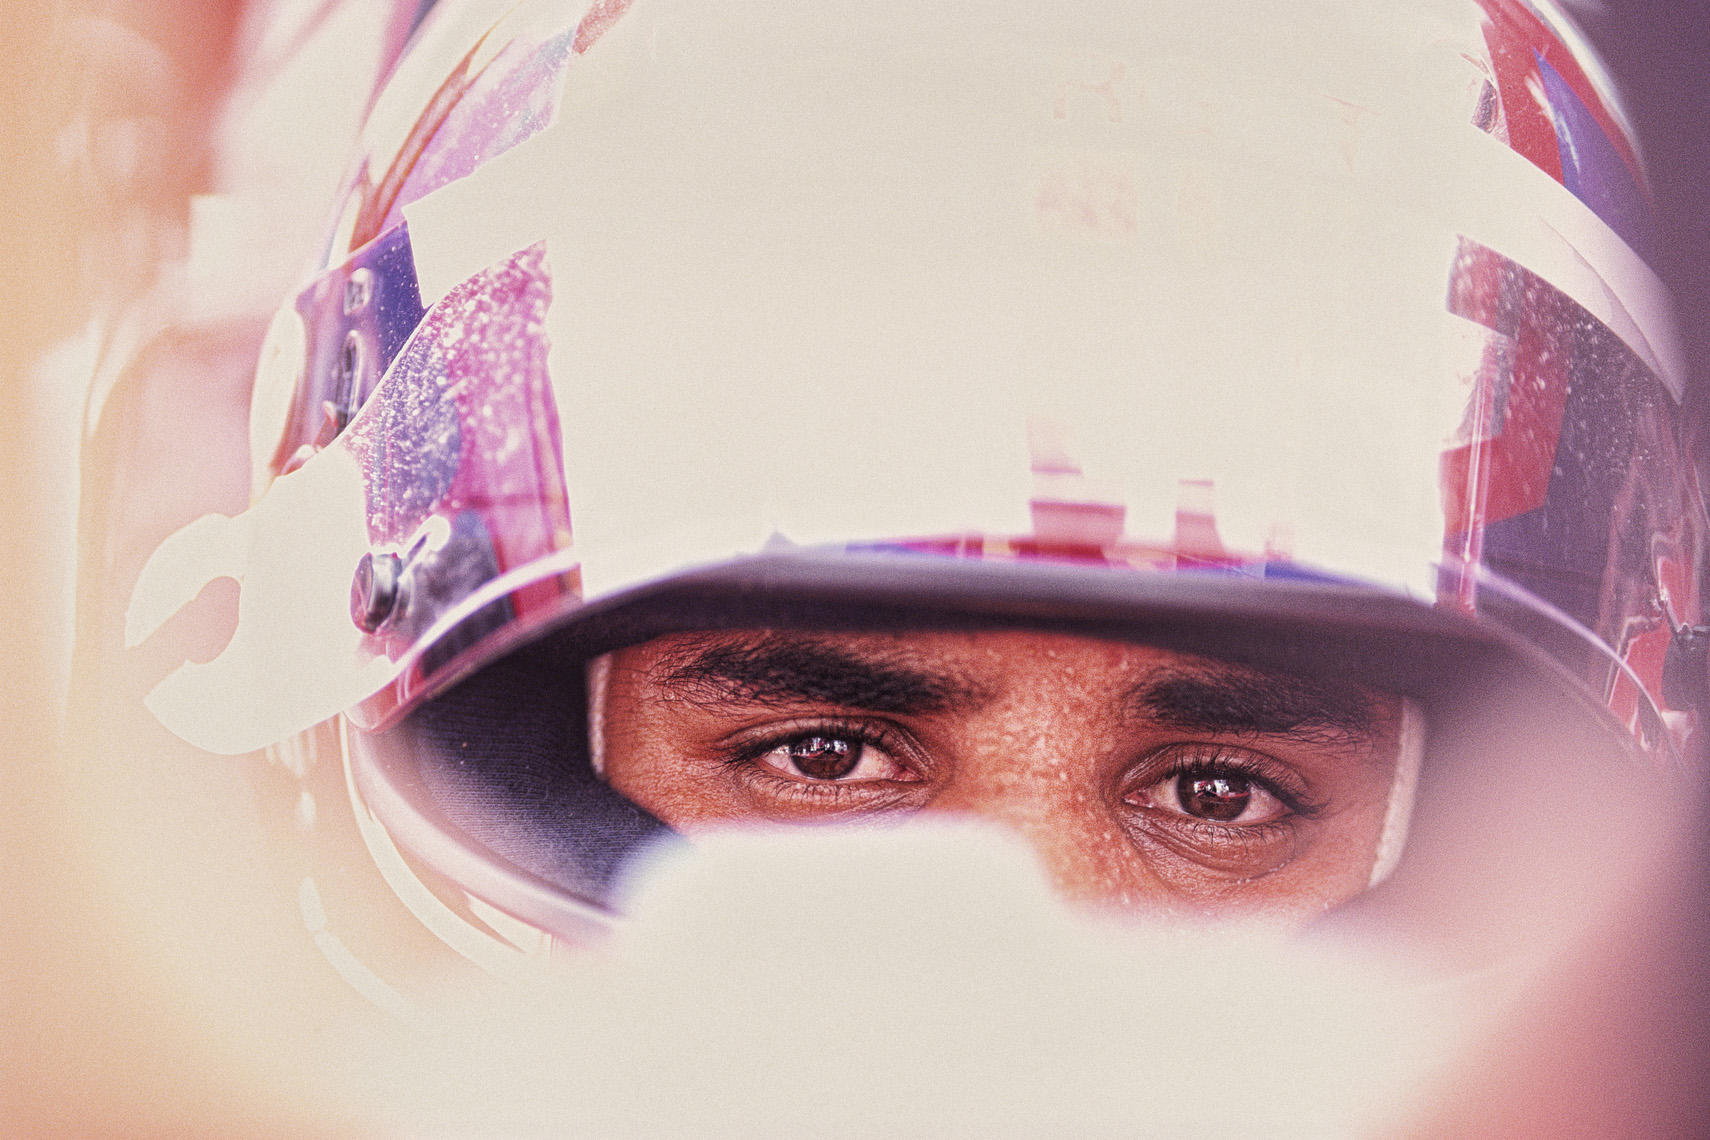 Jaun Pablo Montoya, Indy car Champion